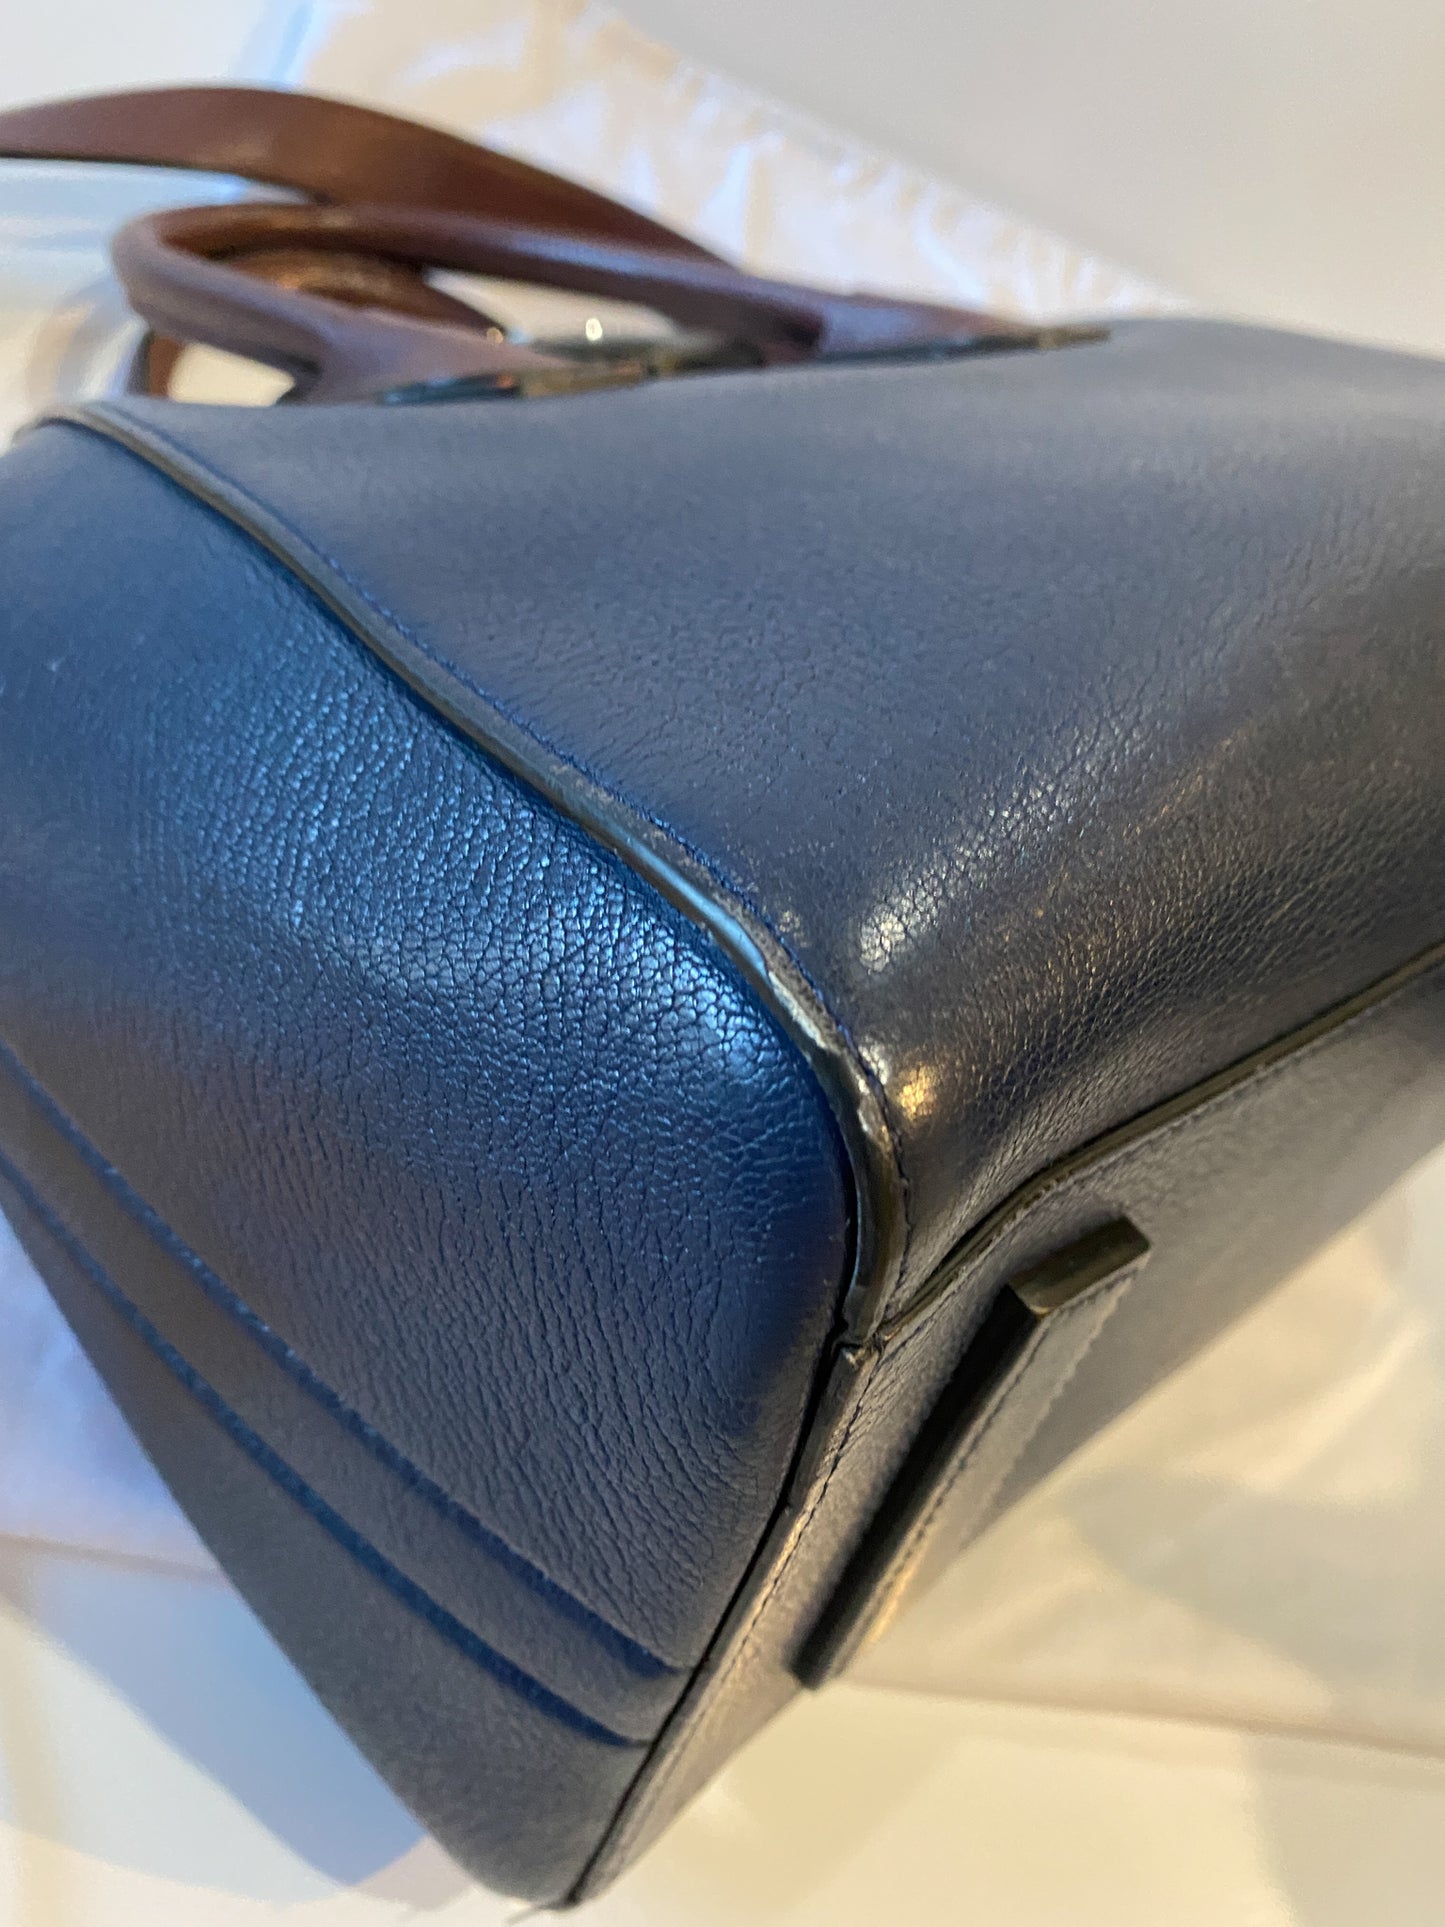 GIVENCHY BLUE LEATHER ANTIGONA - with cloth bag